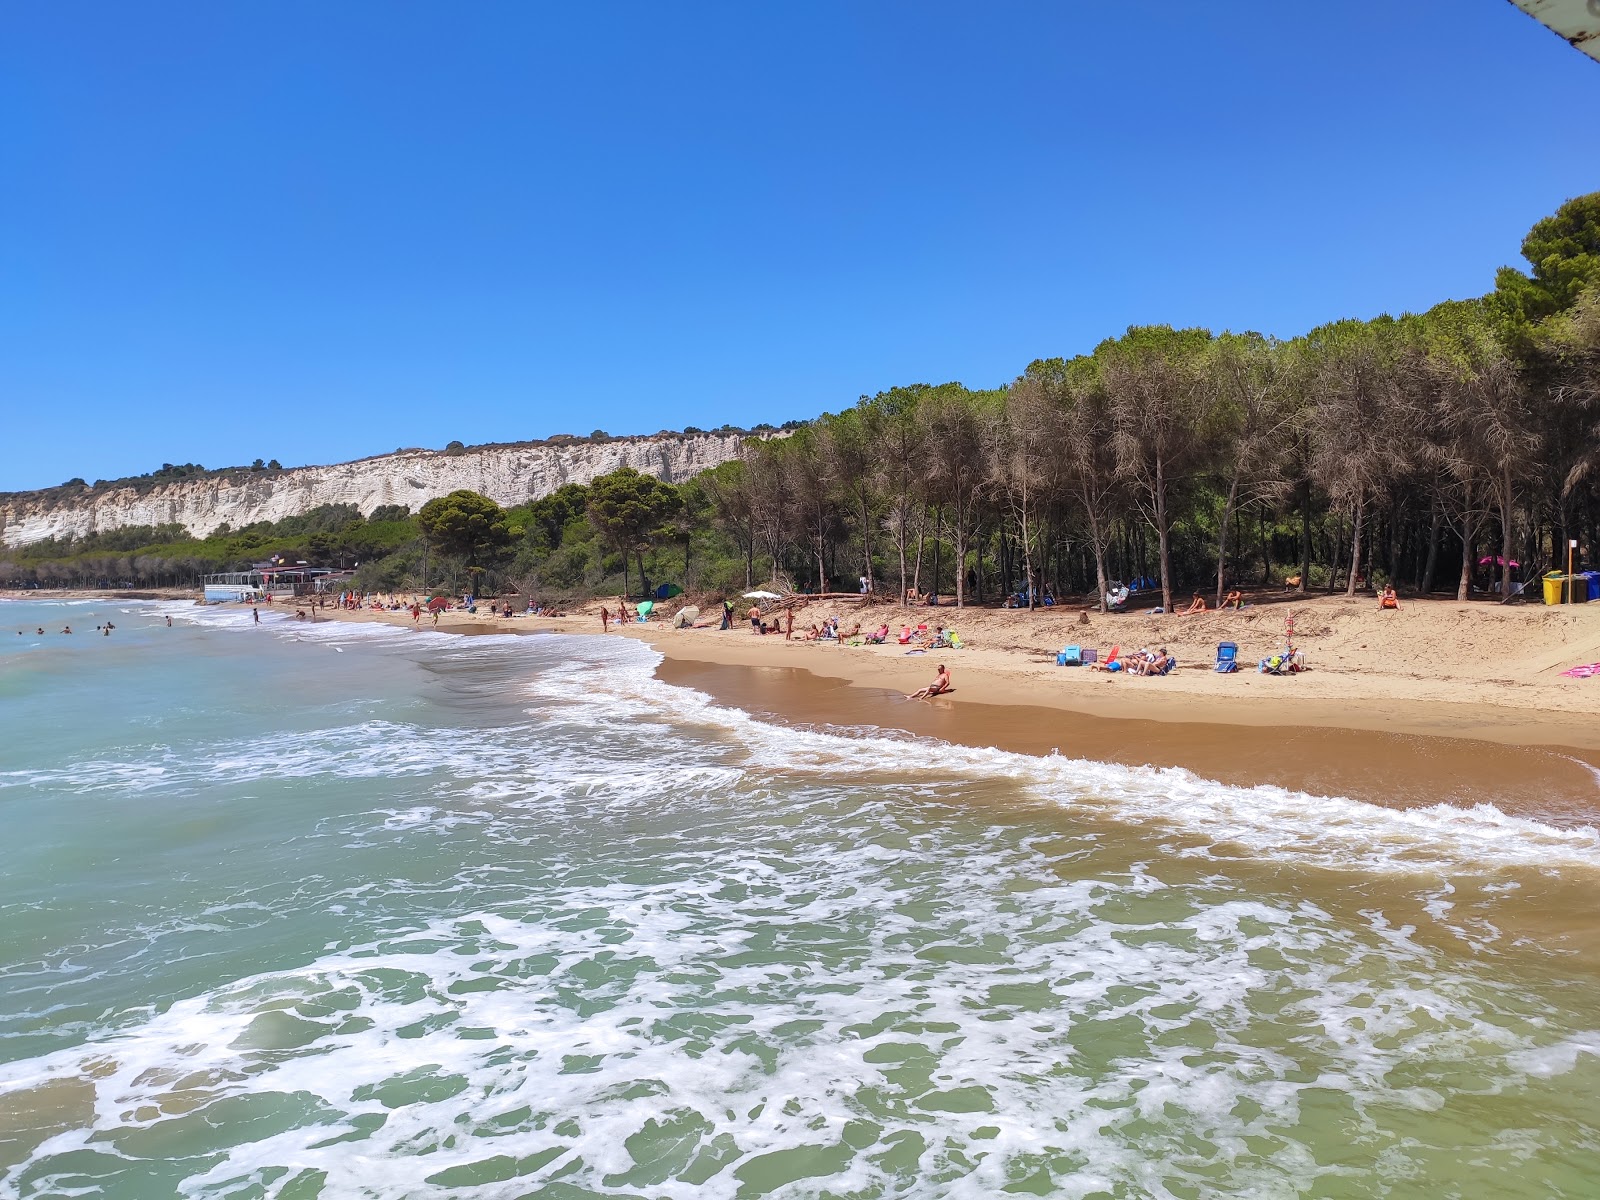 Spiaggia Di Eraclea Minoa'in fotoğrafı parlak kum yüzey ile